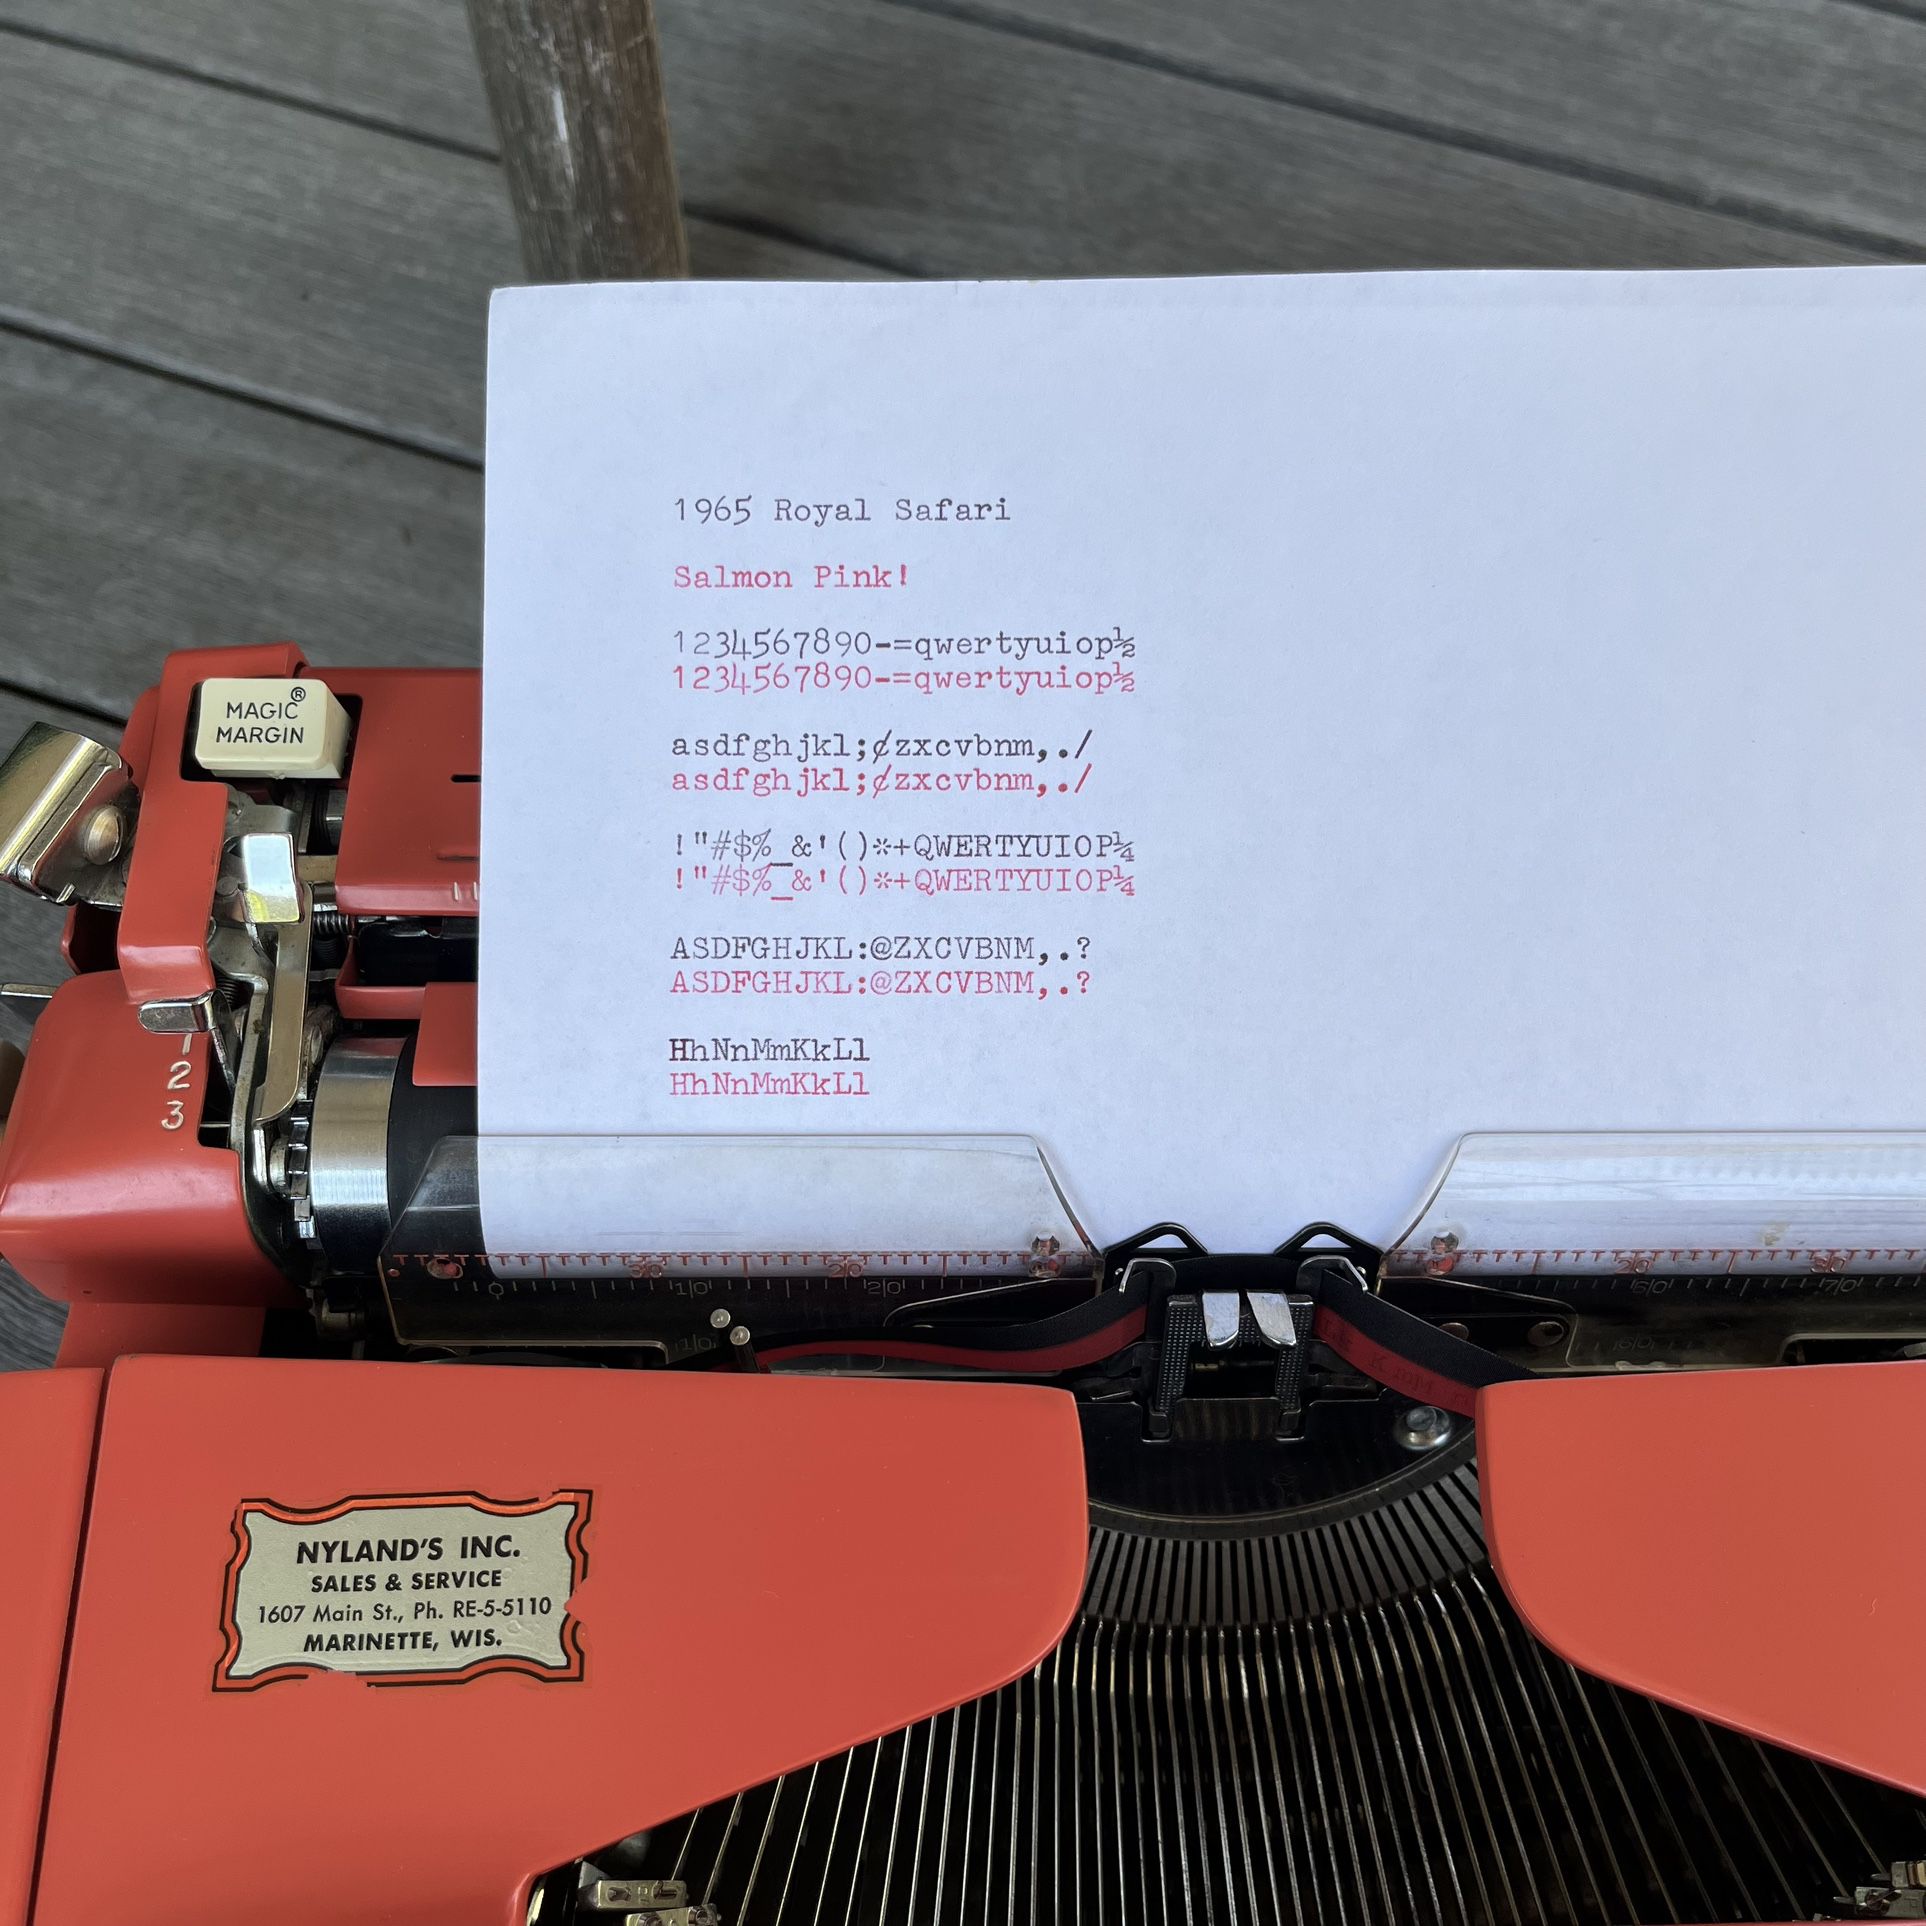 Vintage Kids typewriter for Sale in Simi Valley, CA - OfferUp